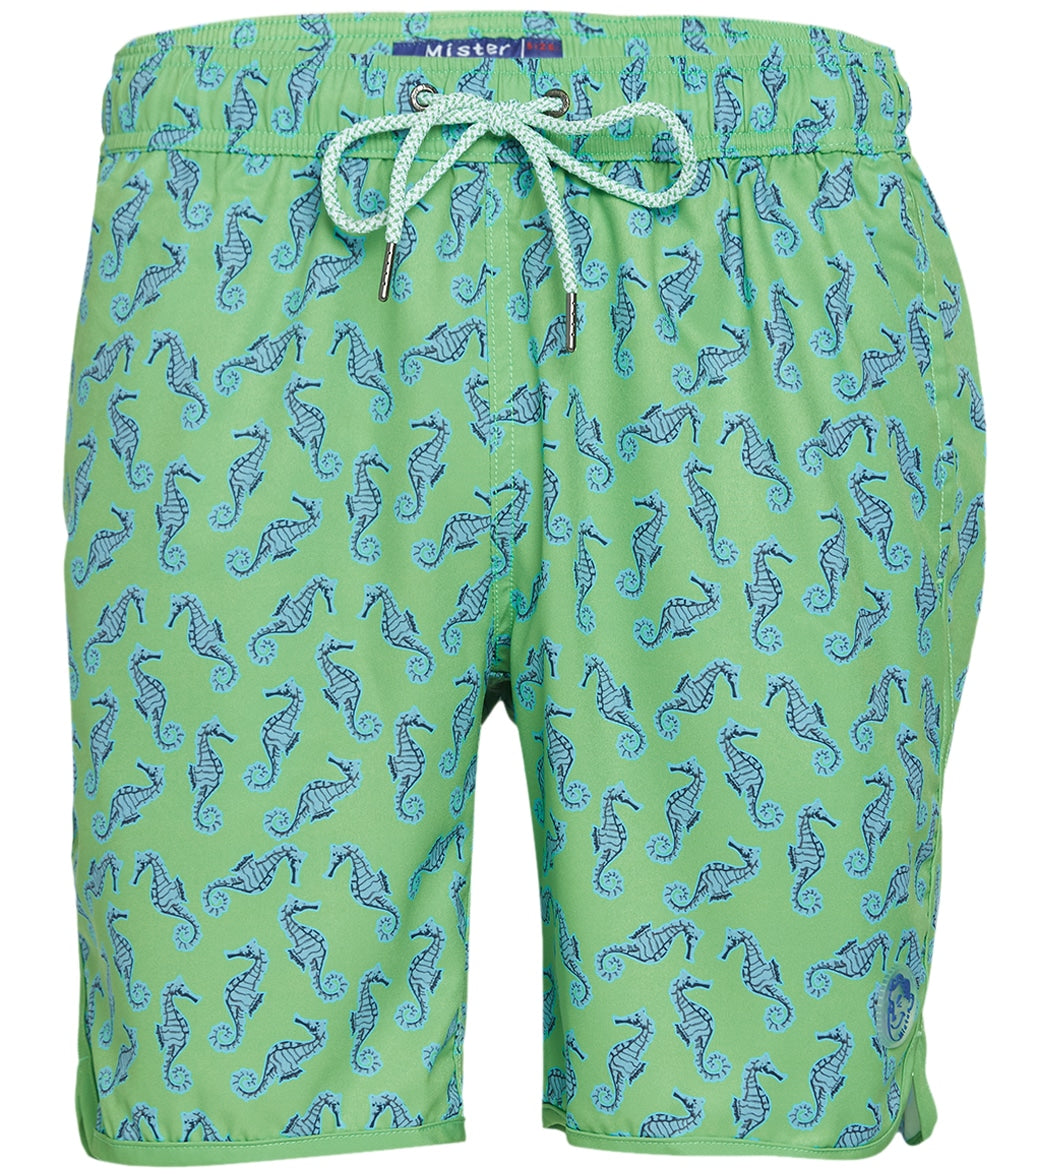 Mr.swim - Mr. swim men's seahorse swim trunk - lime green medium - swimoutlet.com